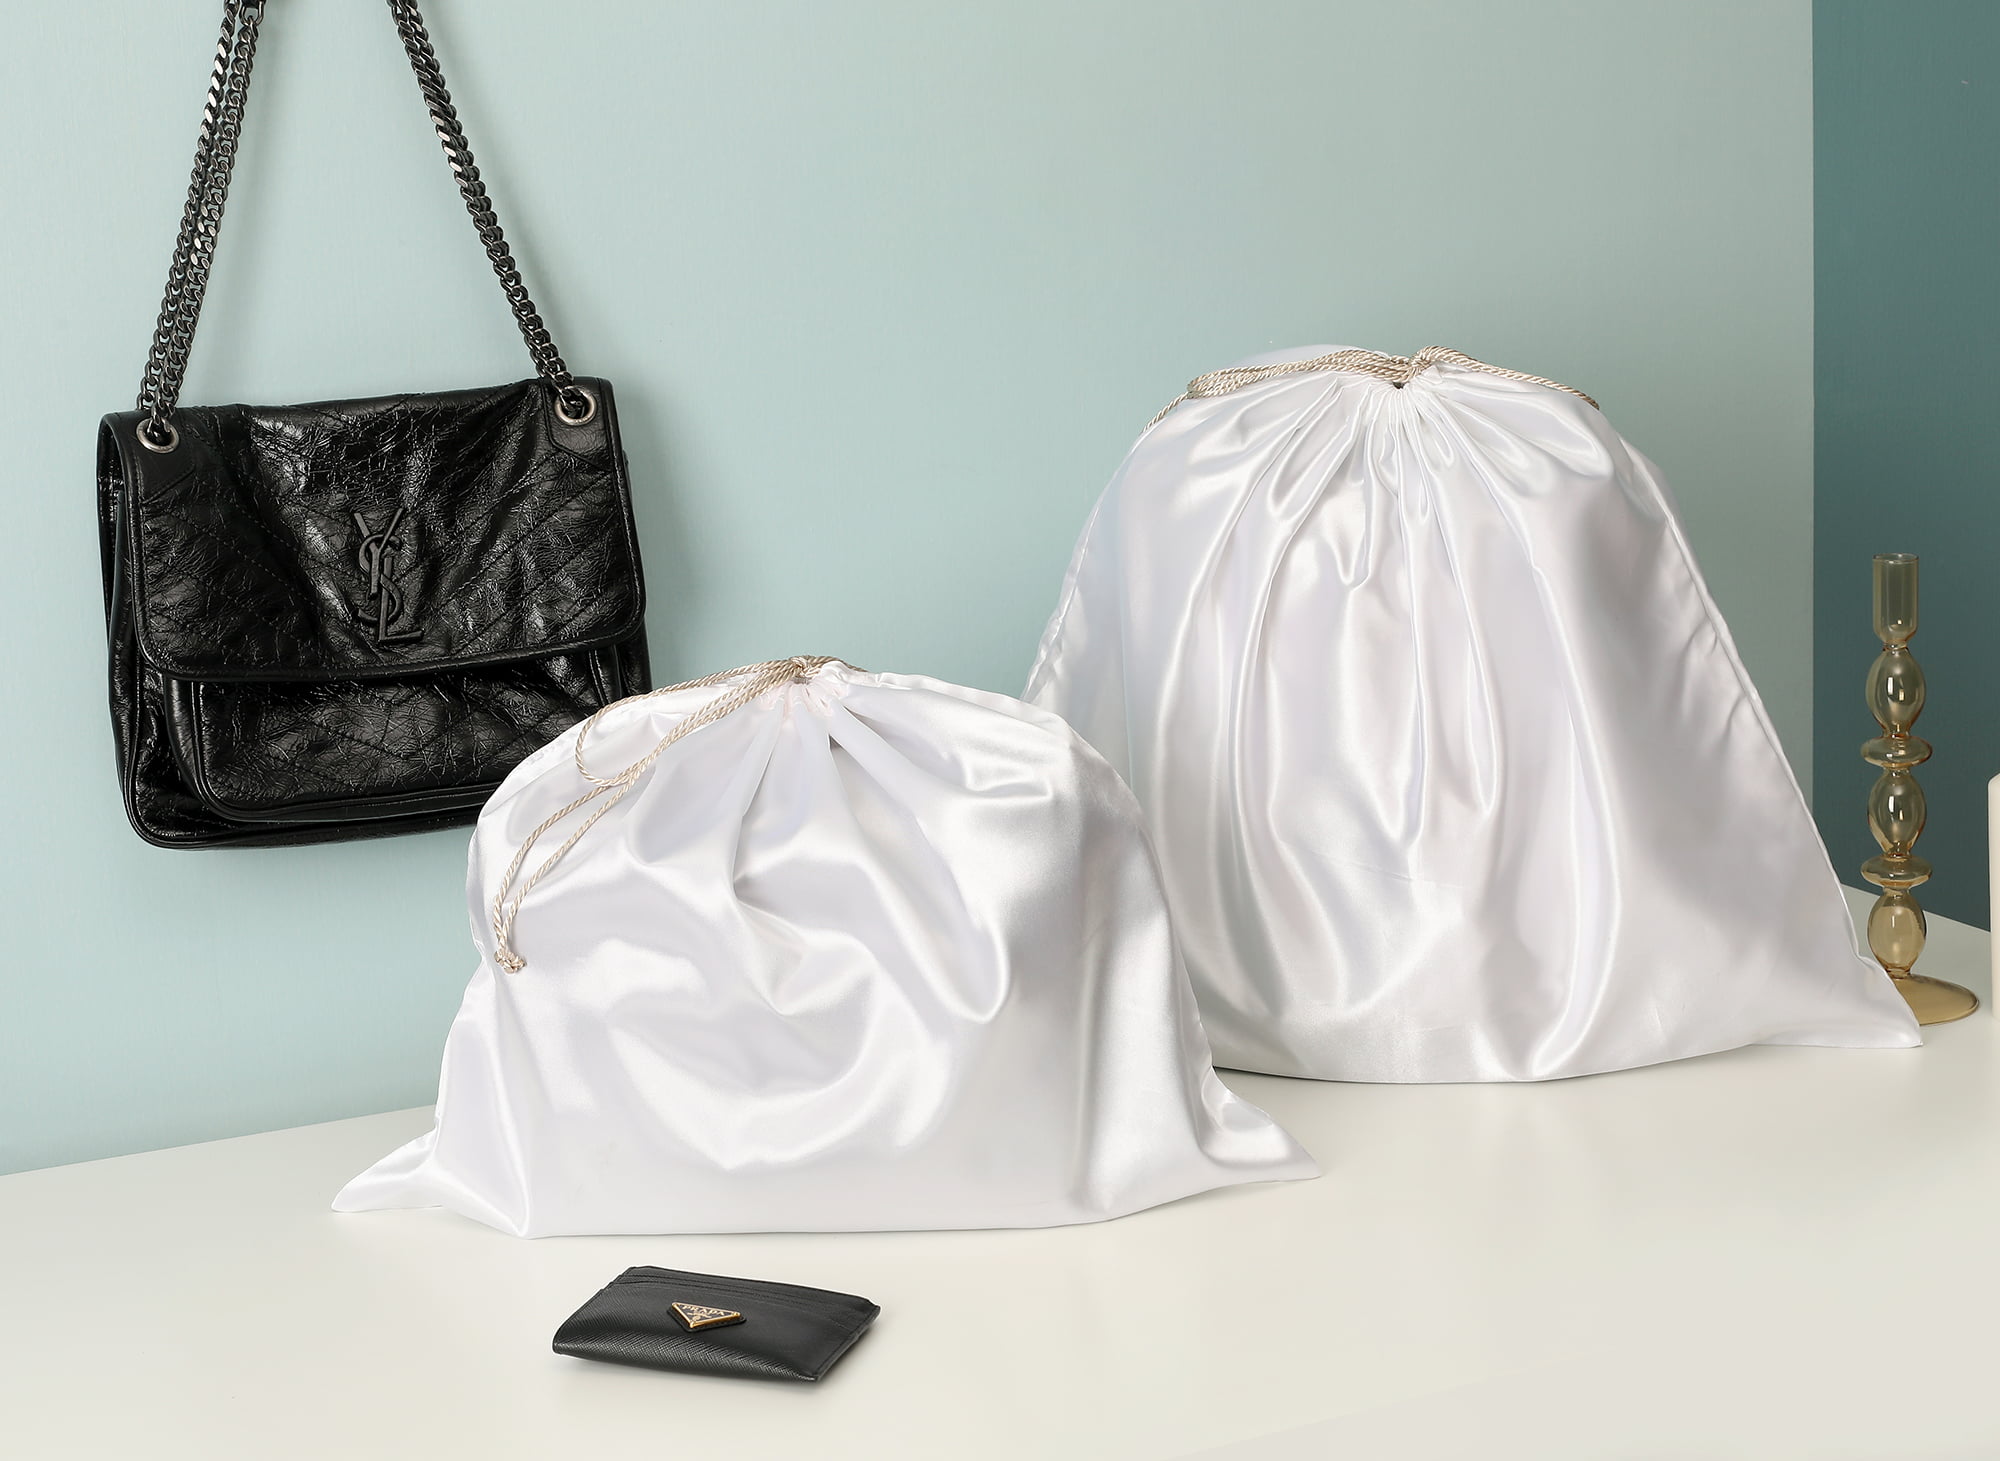 6 Pack Dust Bags for Handbags Silk Dust Cover Bag for Handbags Purses Shoes  B